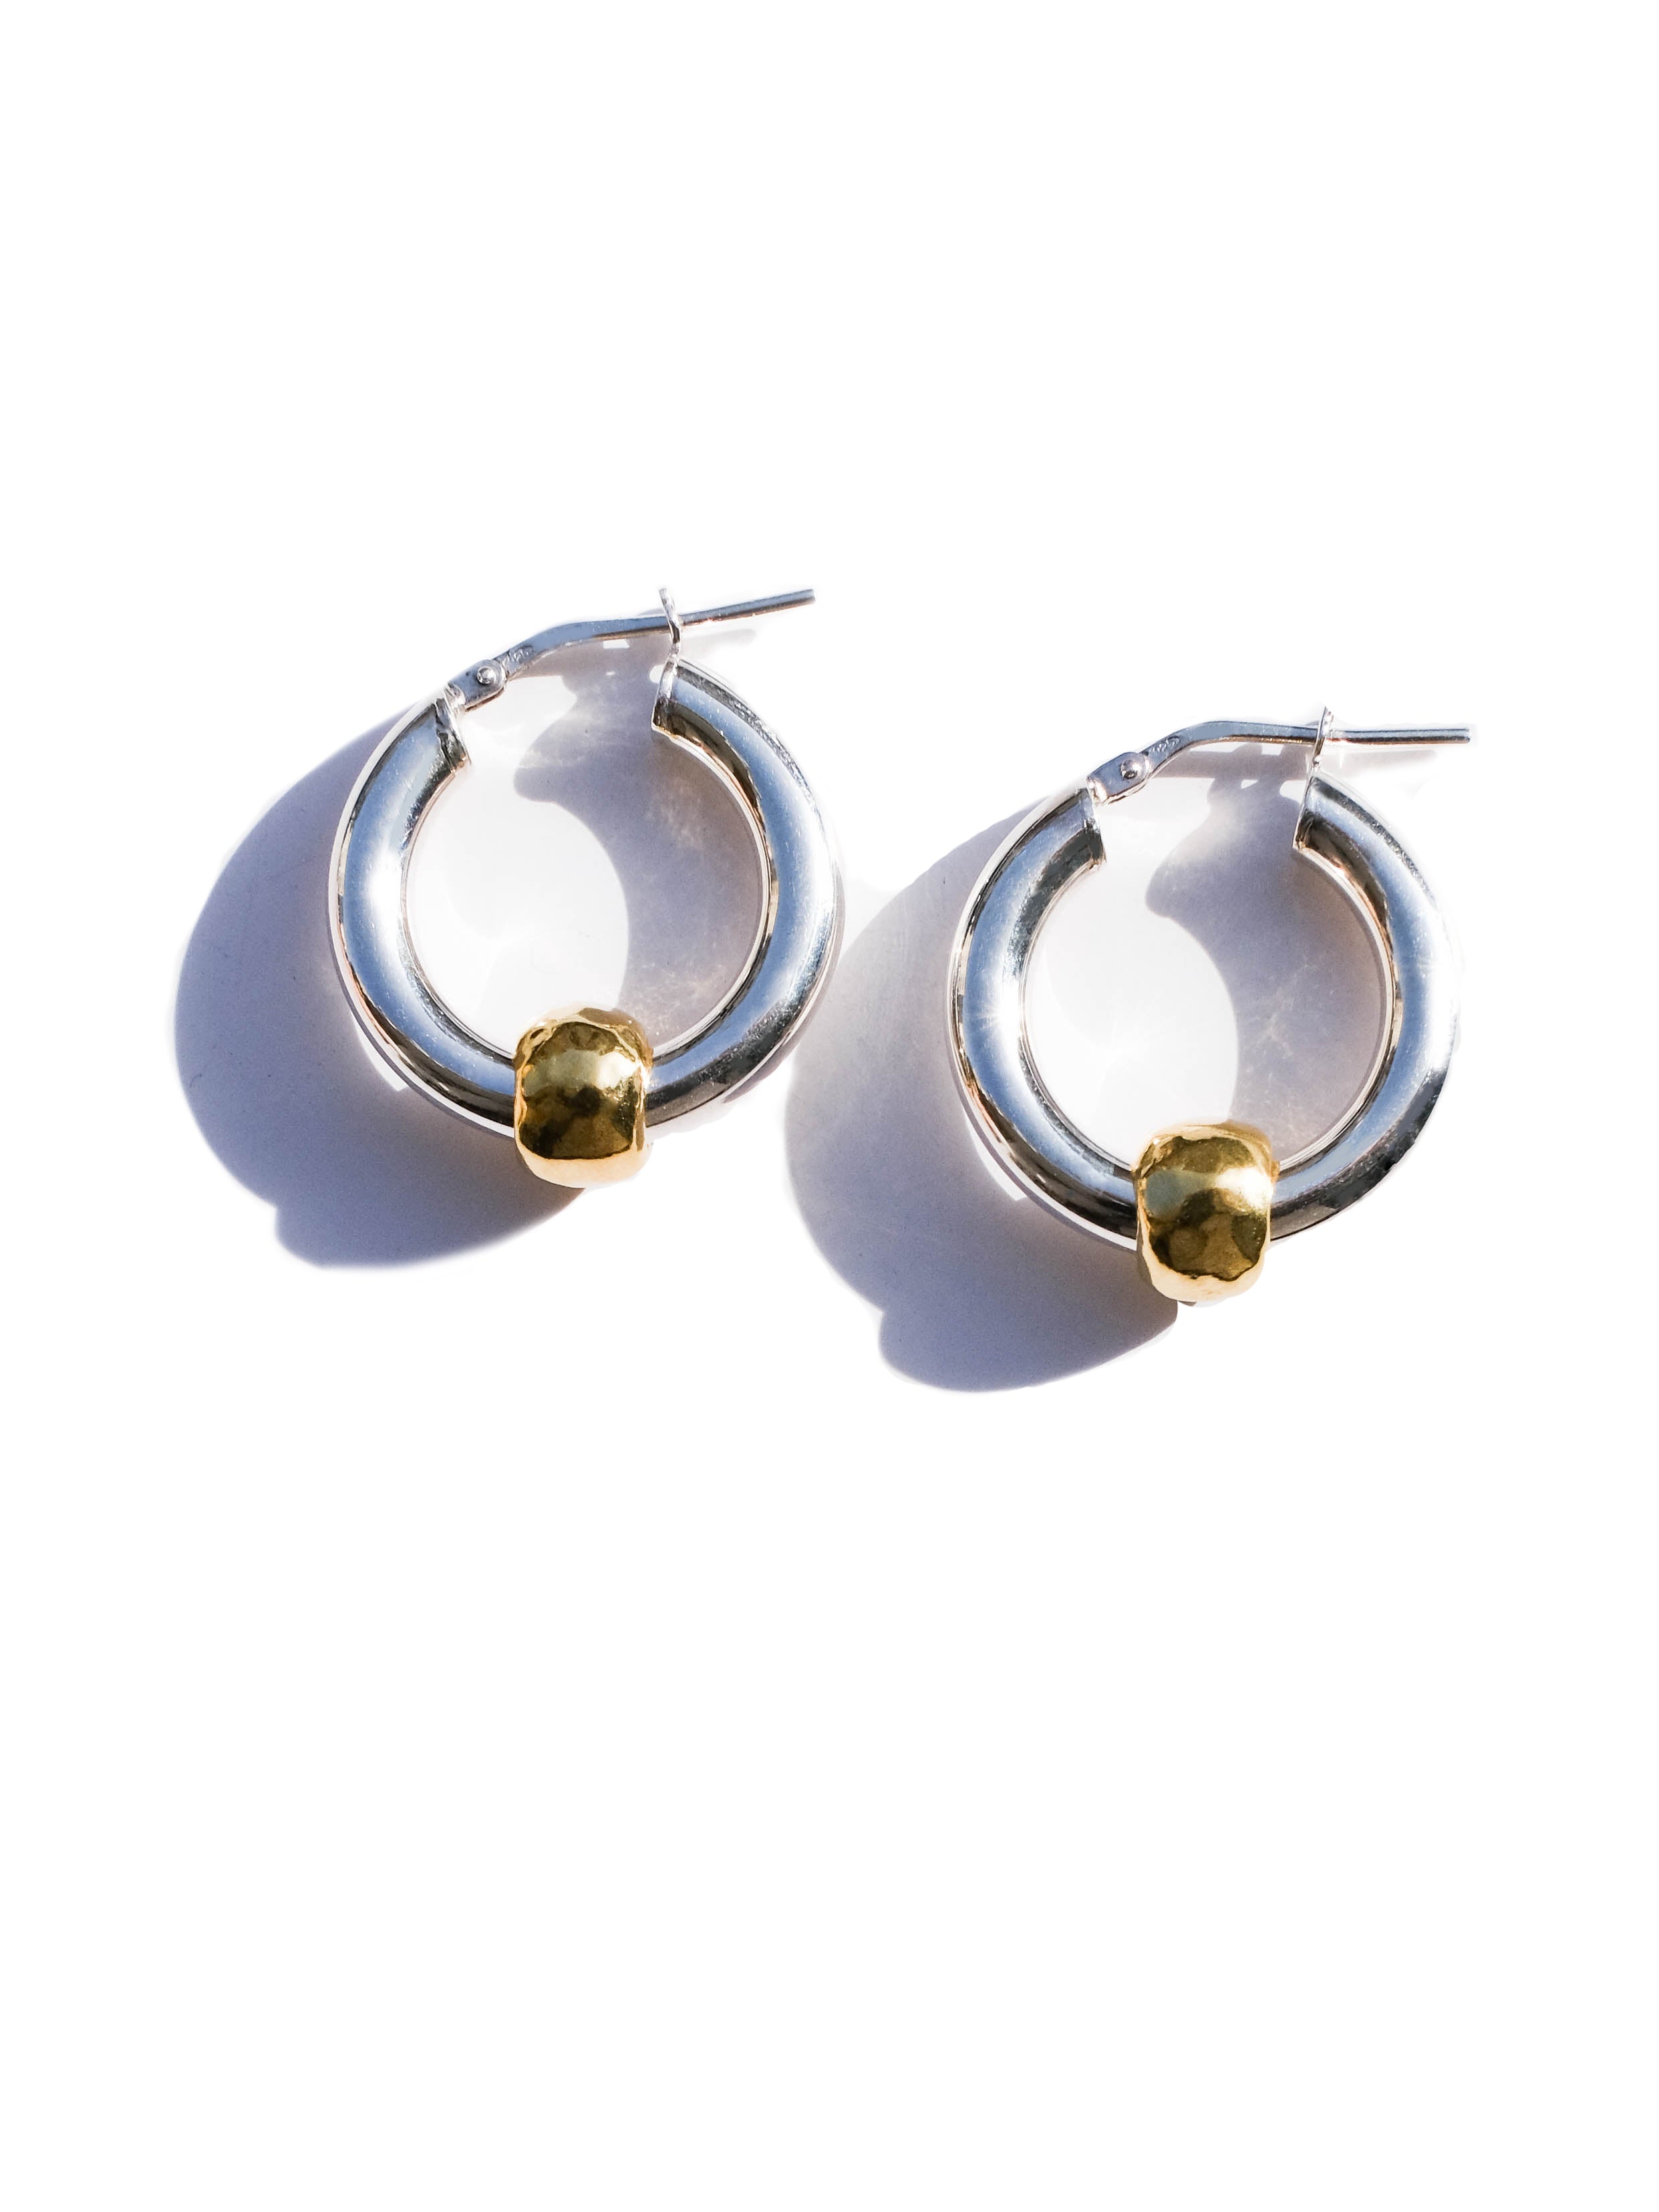 Silver hoops, gold plated pellet earrings